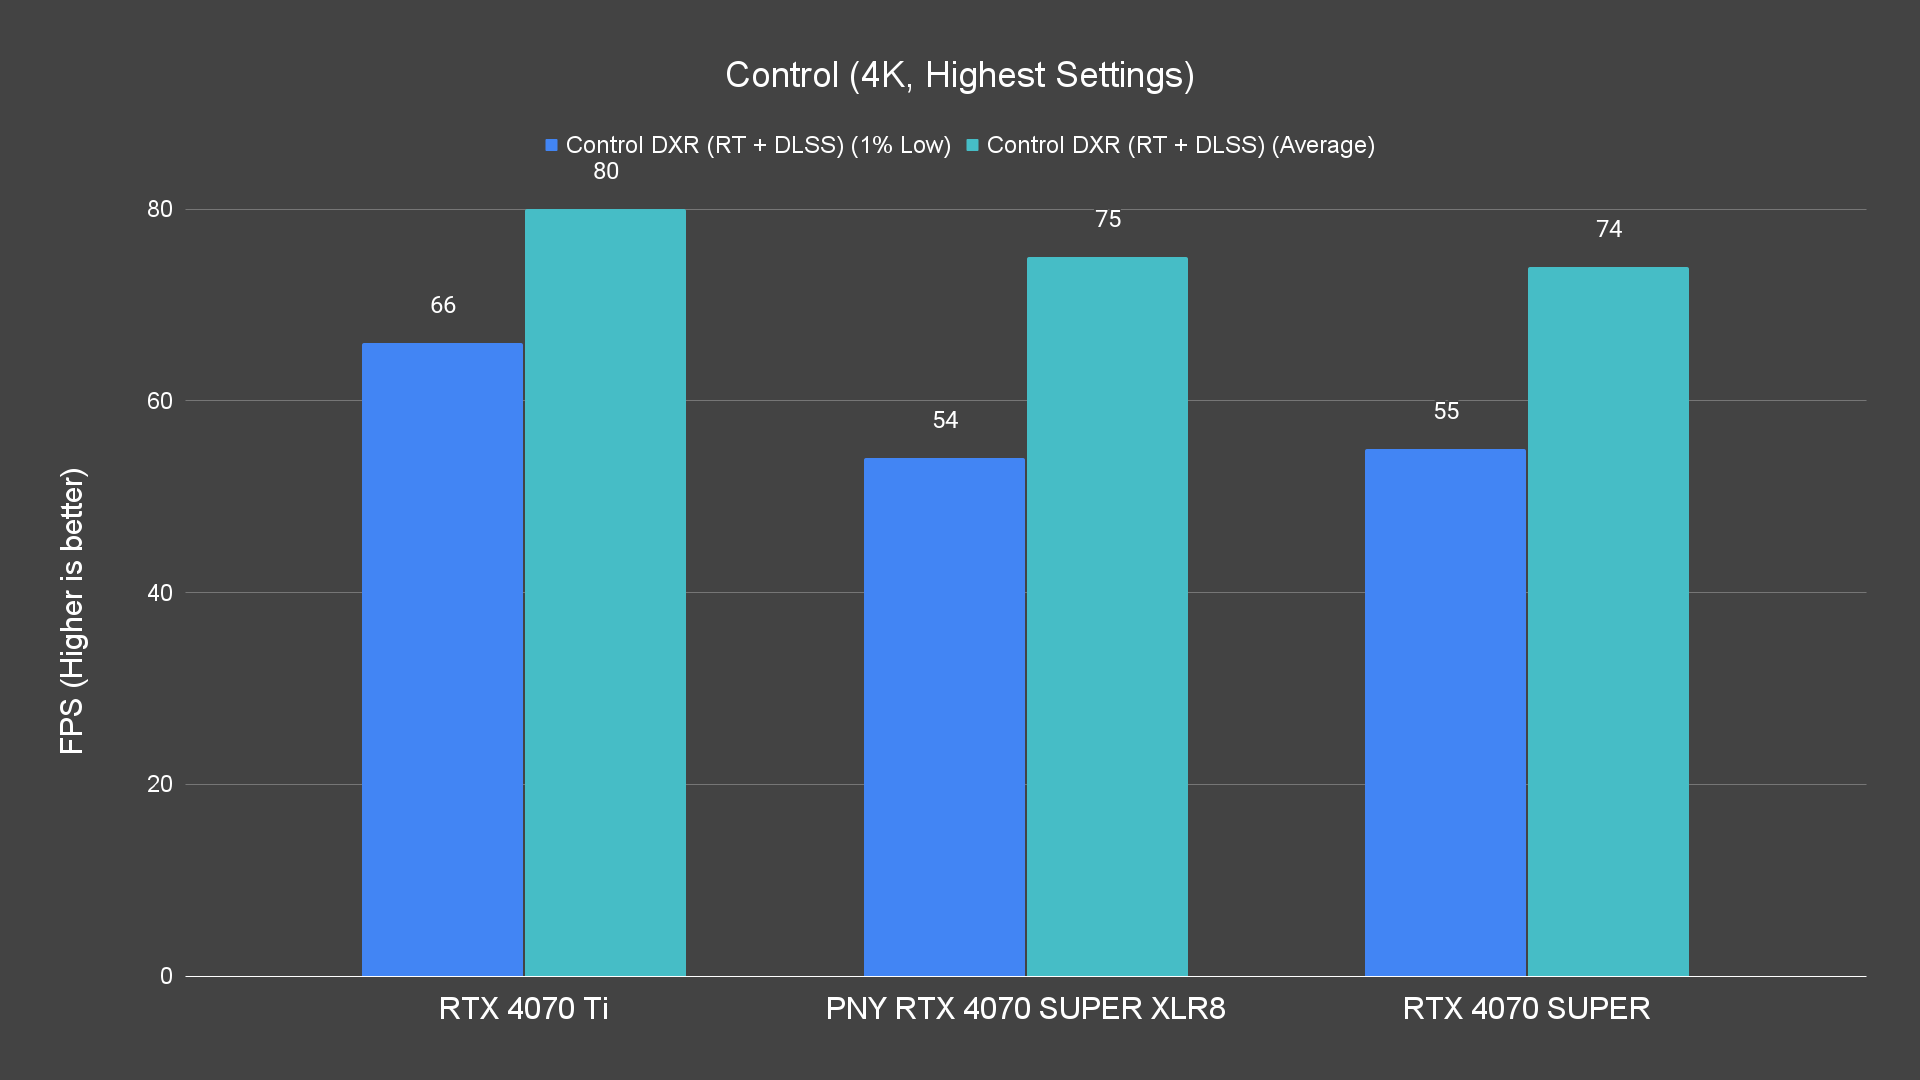 Control (4K, Highest Settings) Ray Tracing PNY RTX 4070 SUPER XLR8